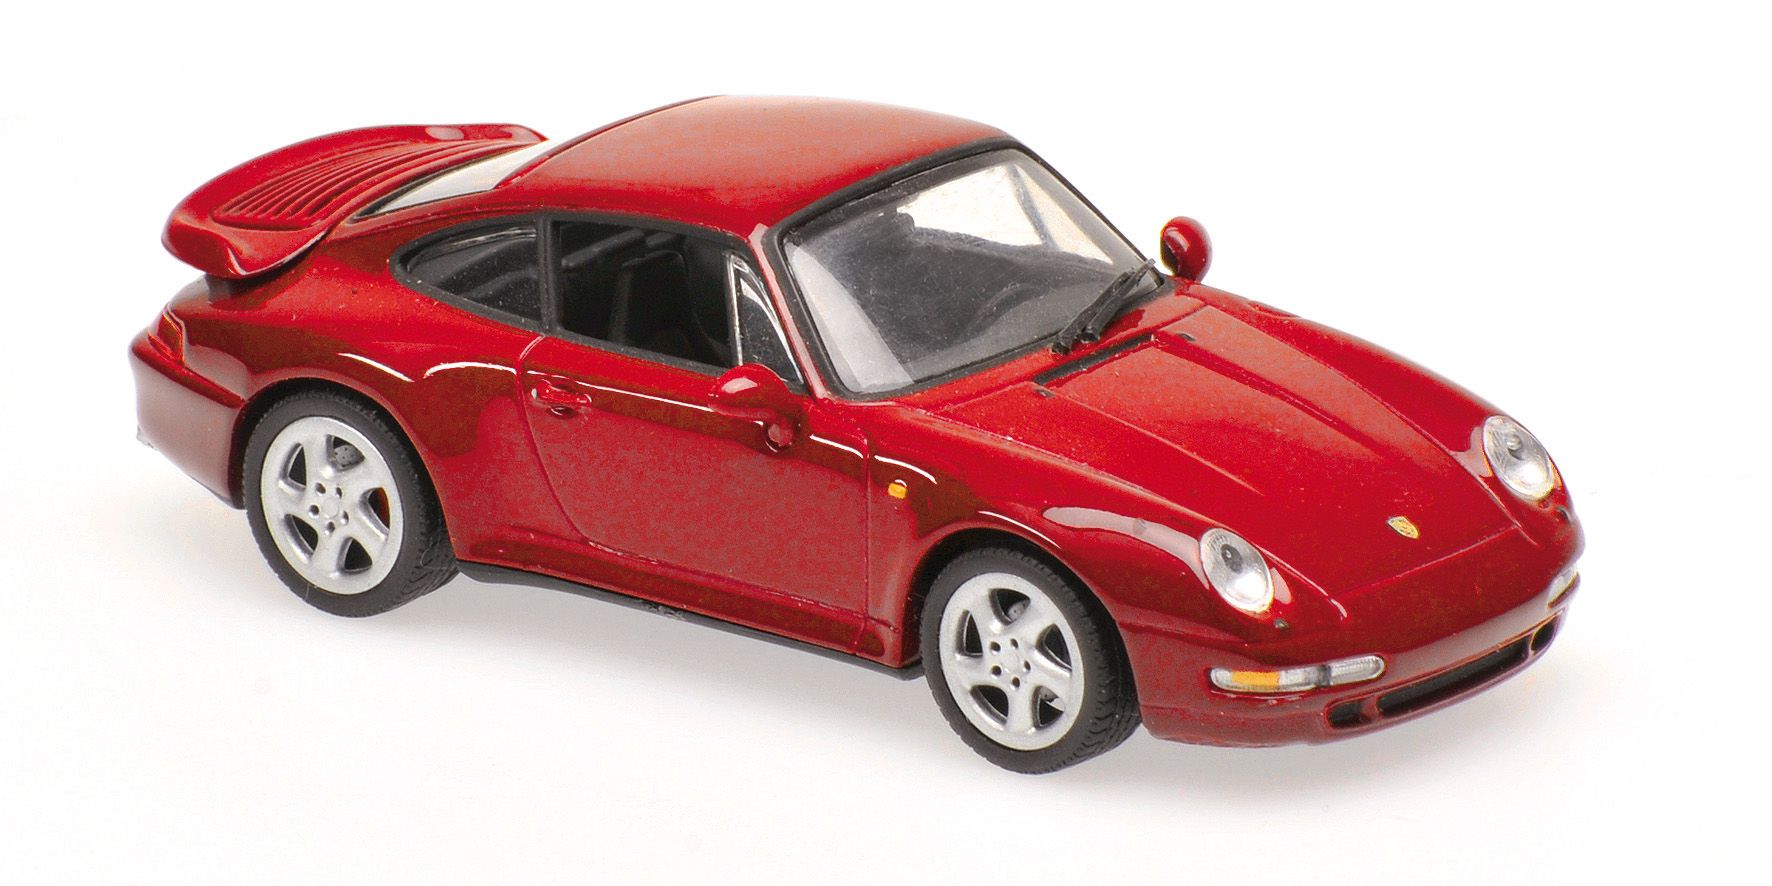 Maxichamps 1/43 Porsche 911 (993) Turbo S Red Diecast Model